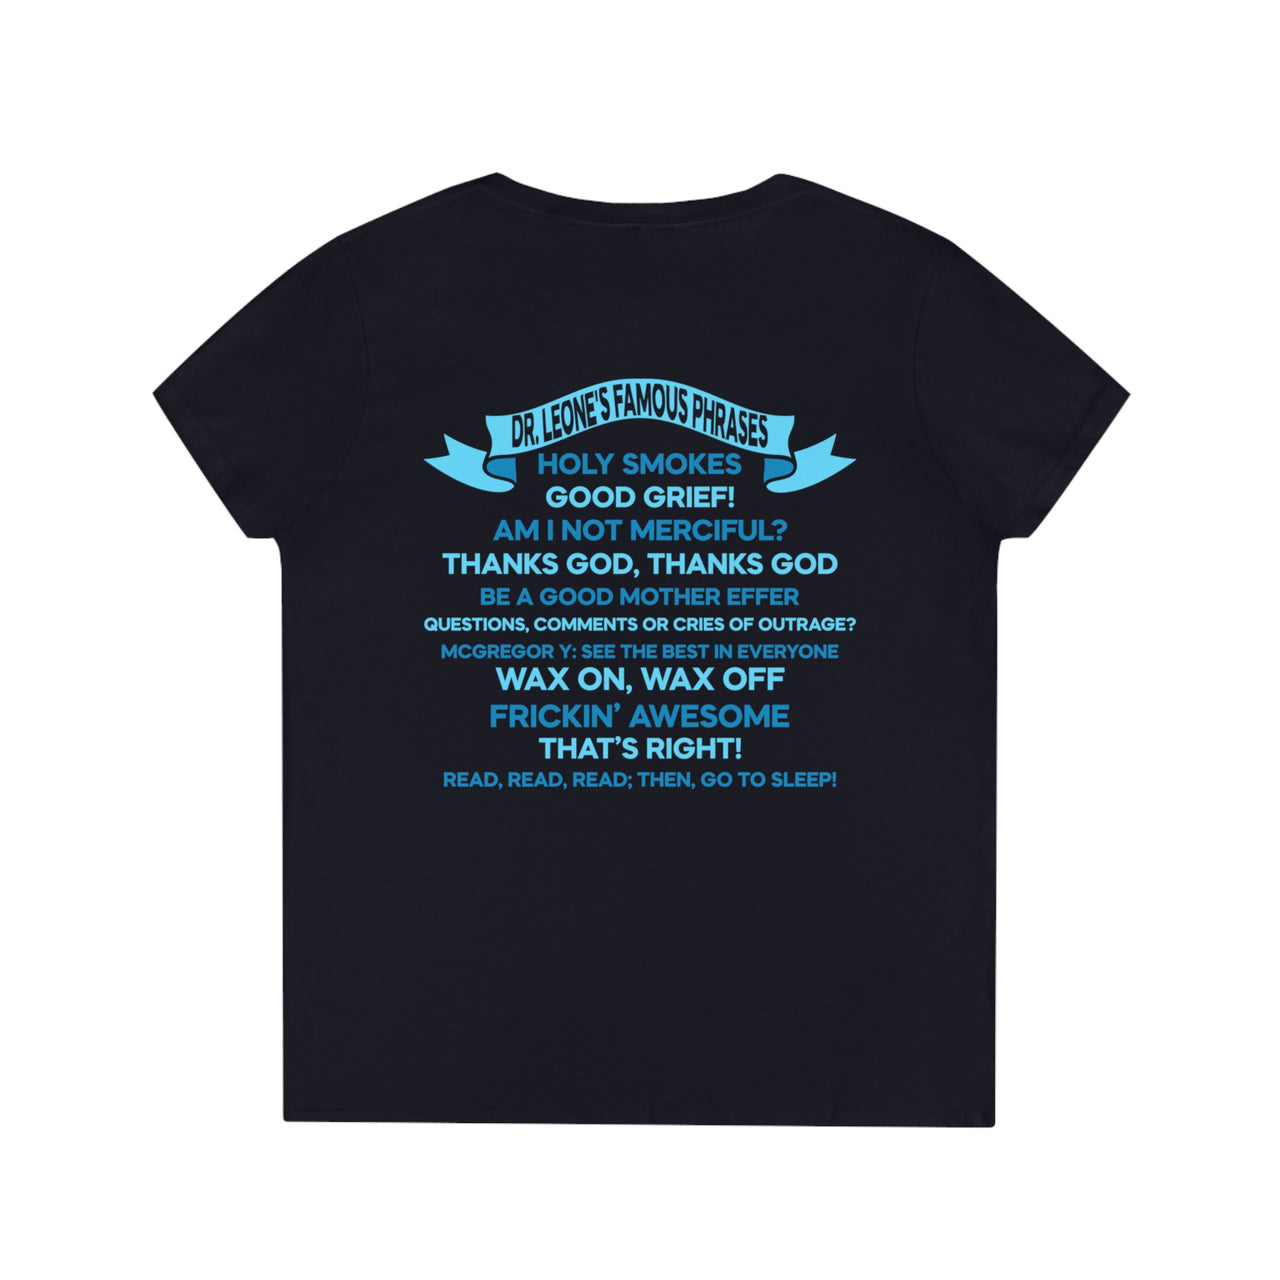 Ladies' V-Neck T-Shirt - Oceanside 70 - Blue Ribbon Back